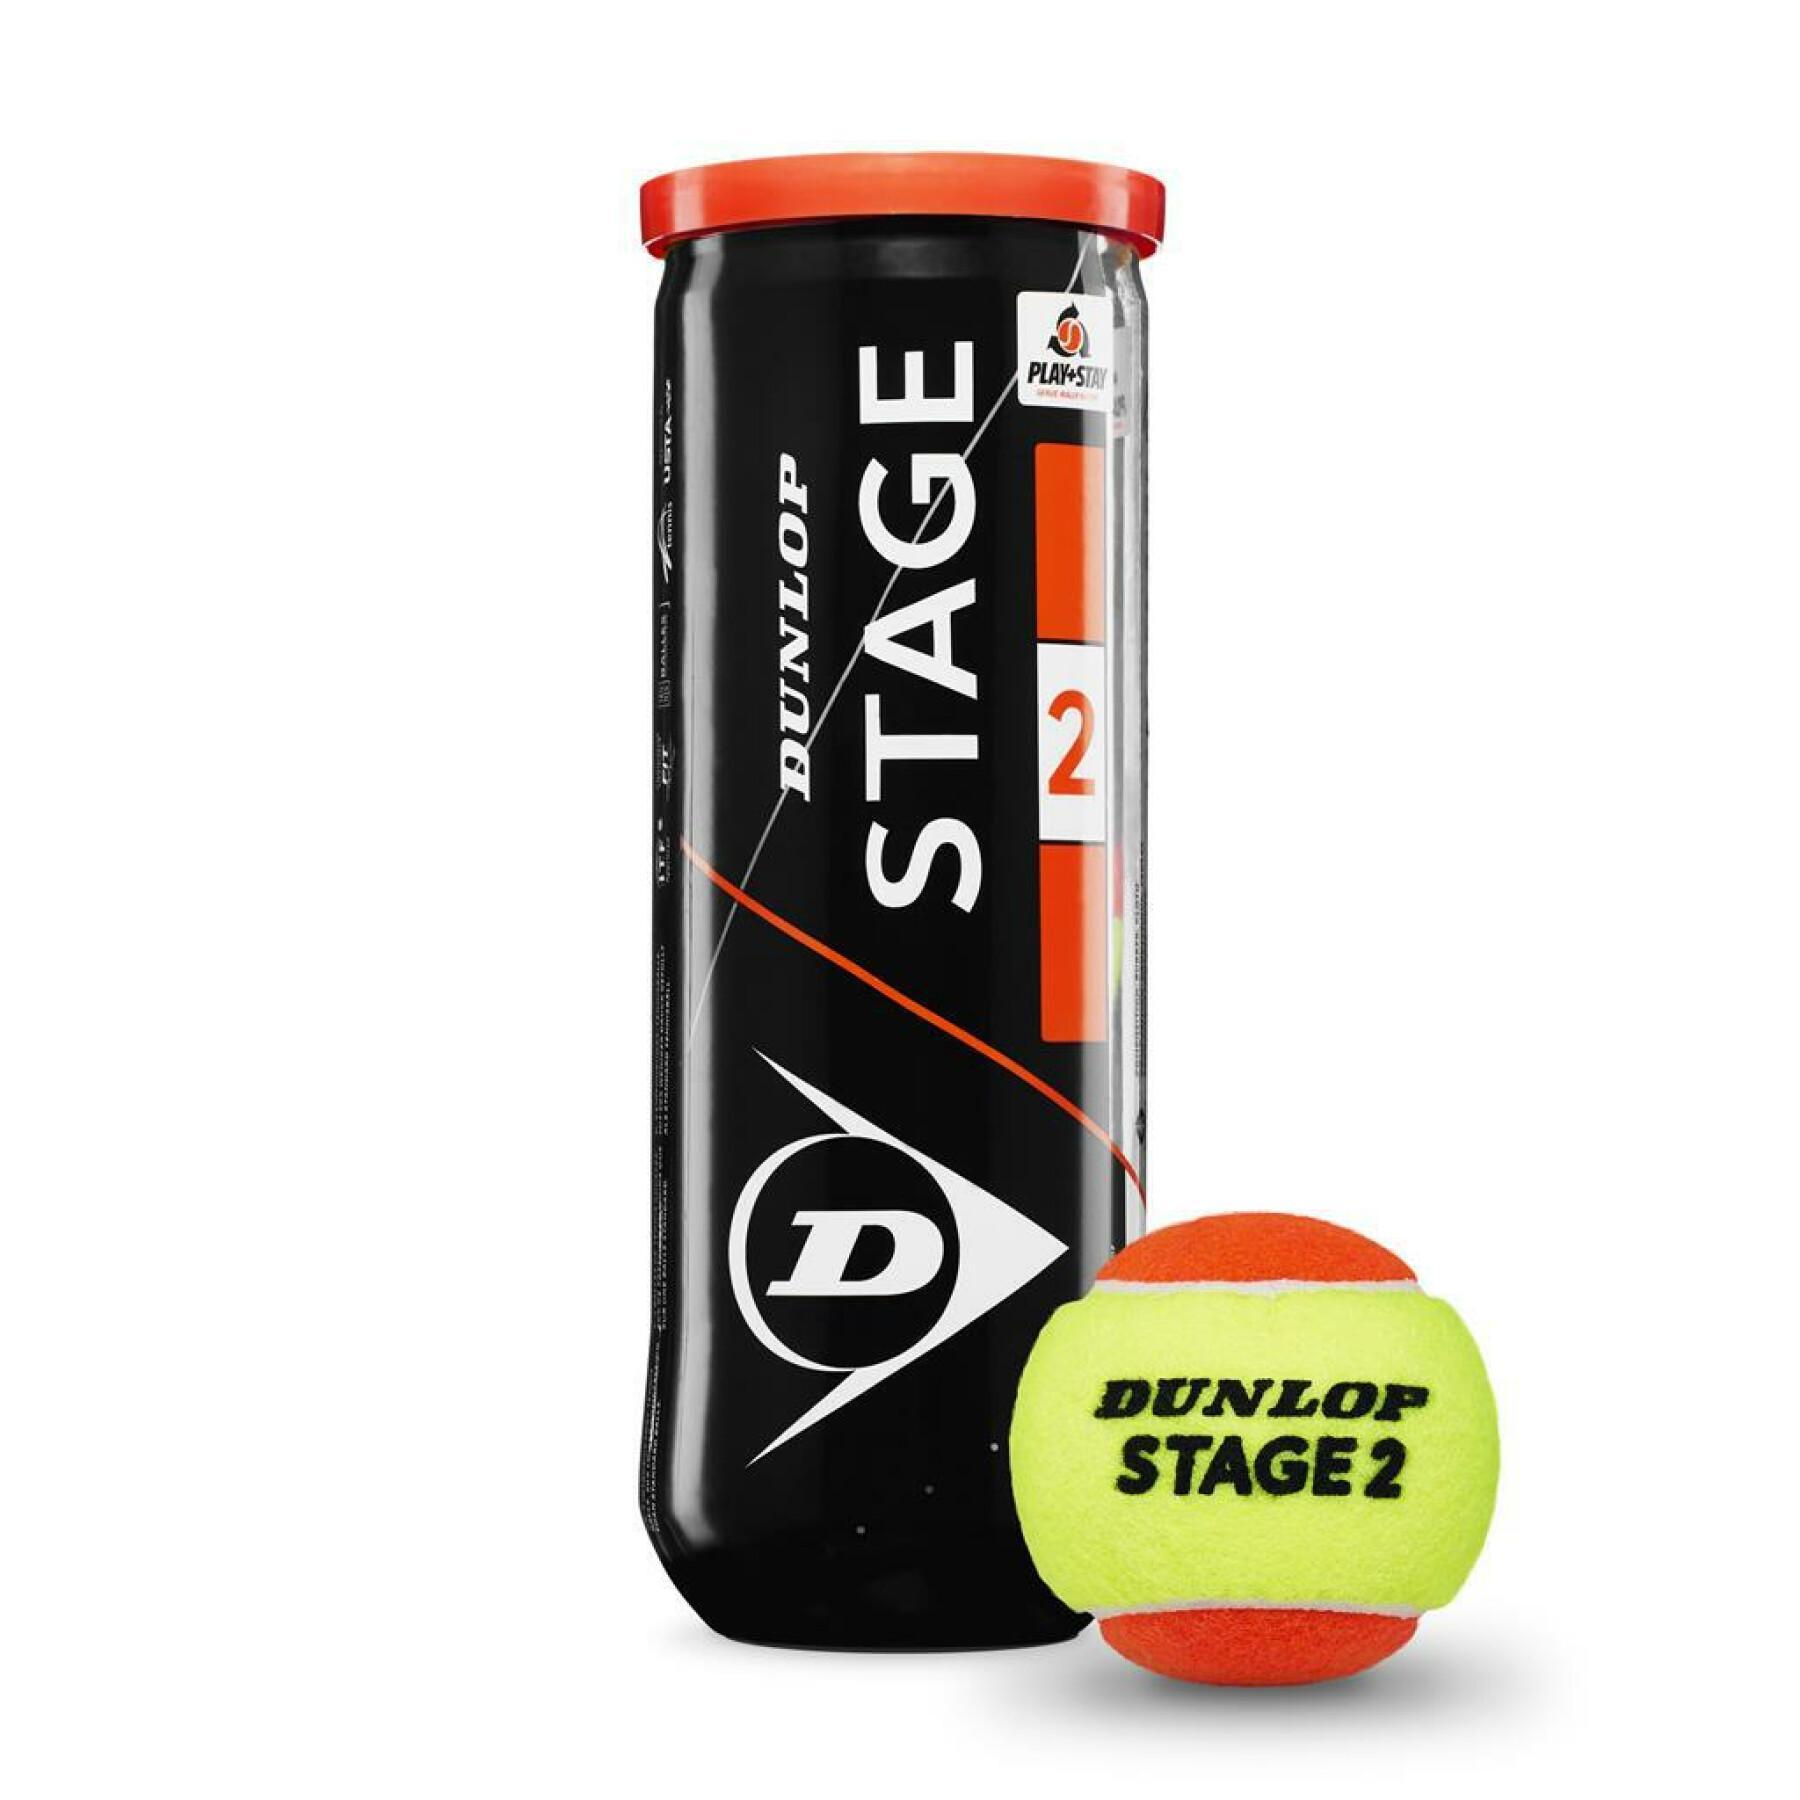 Conjunto de 3 bolas de ténis Dunlop stage 2